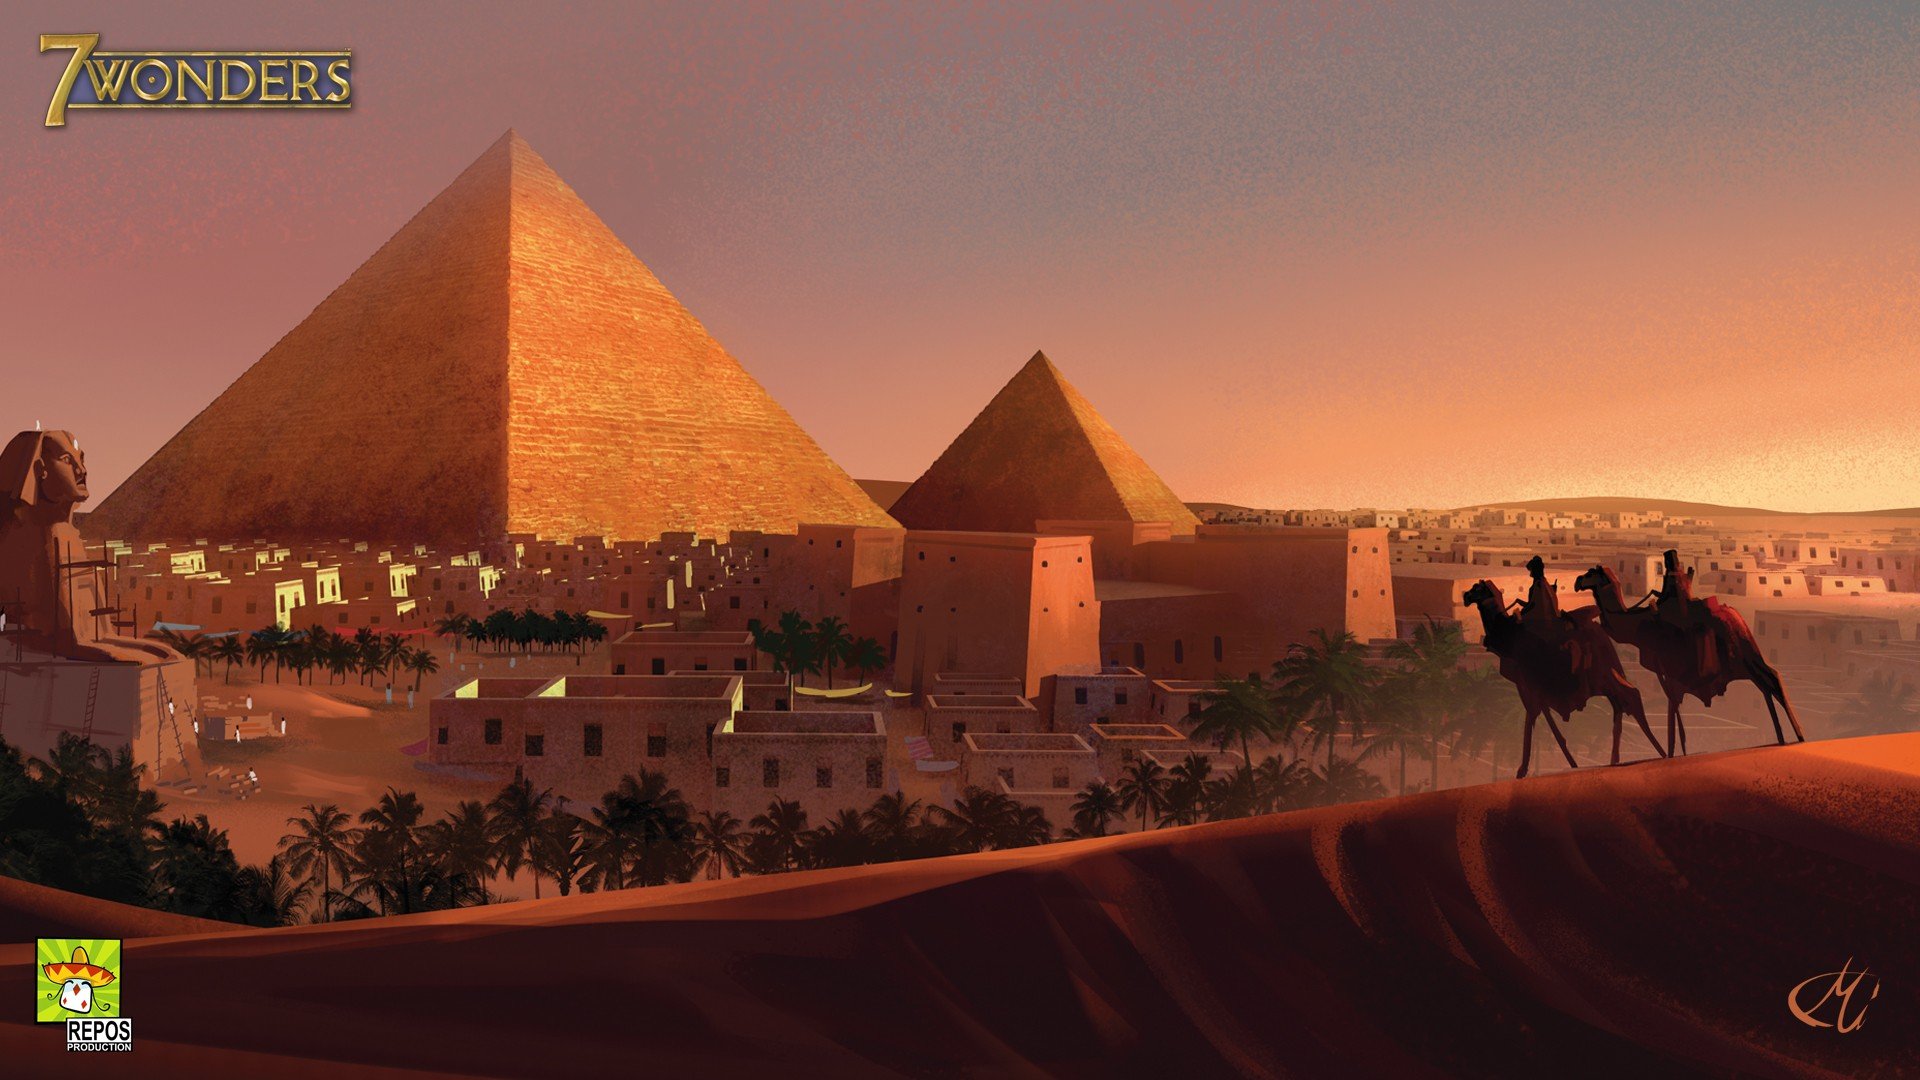  artwork 7 Wonders pyramids Great Pyramid of Giza wallpaper background